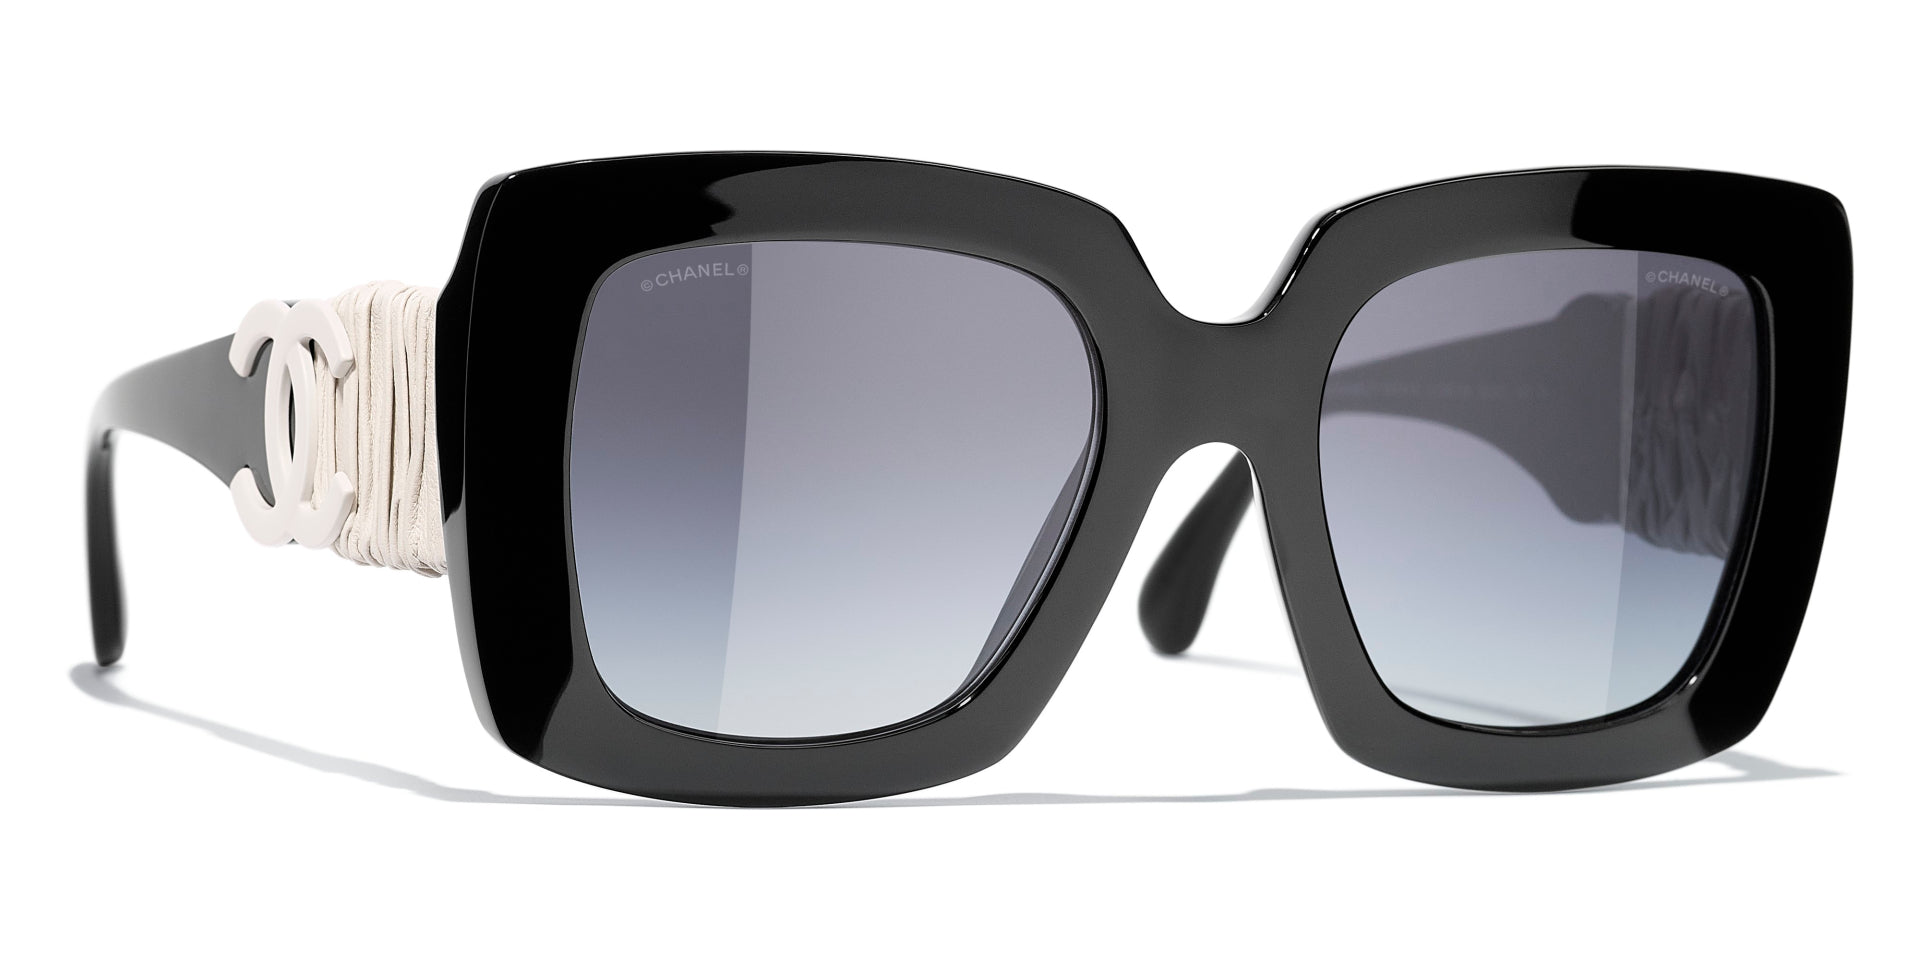 Chanel Square Sunglasses - Acetate, Black - Polarized - UV Protected - Women's Sunglasses - 5509 C622/T8